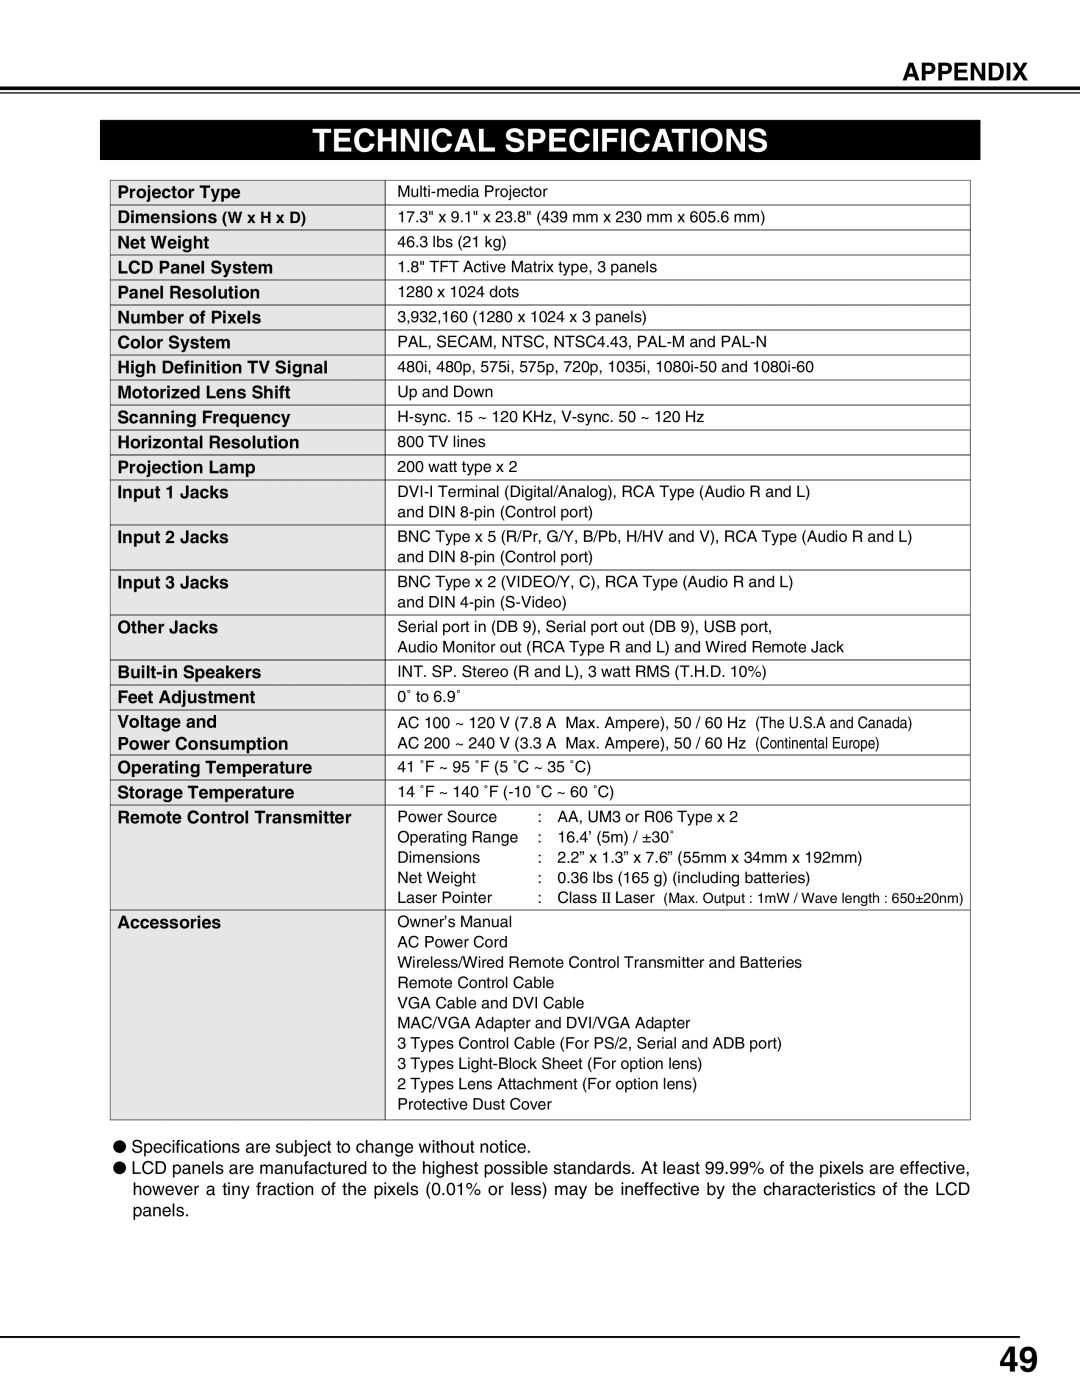 Eiki LC-SX4LA instruction manual Technical Specifications, Appendix 